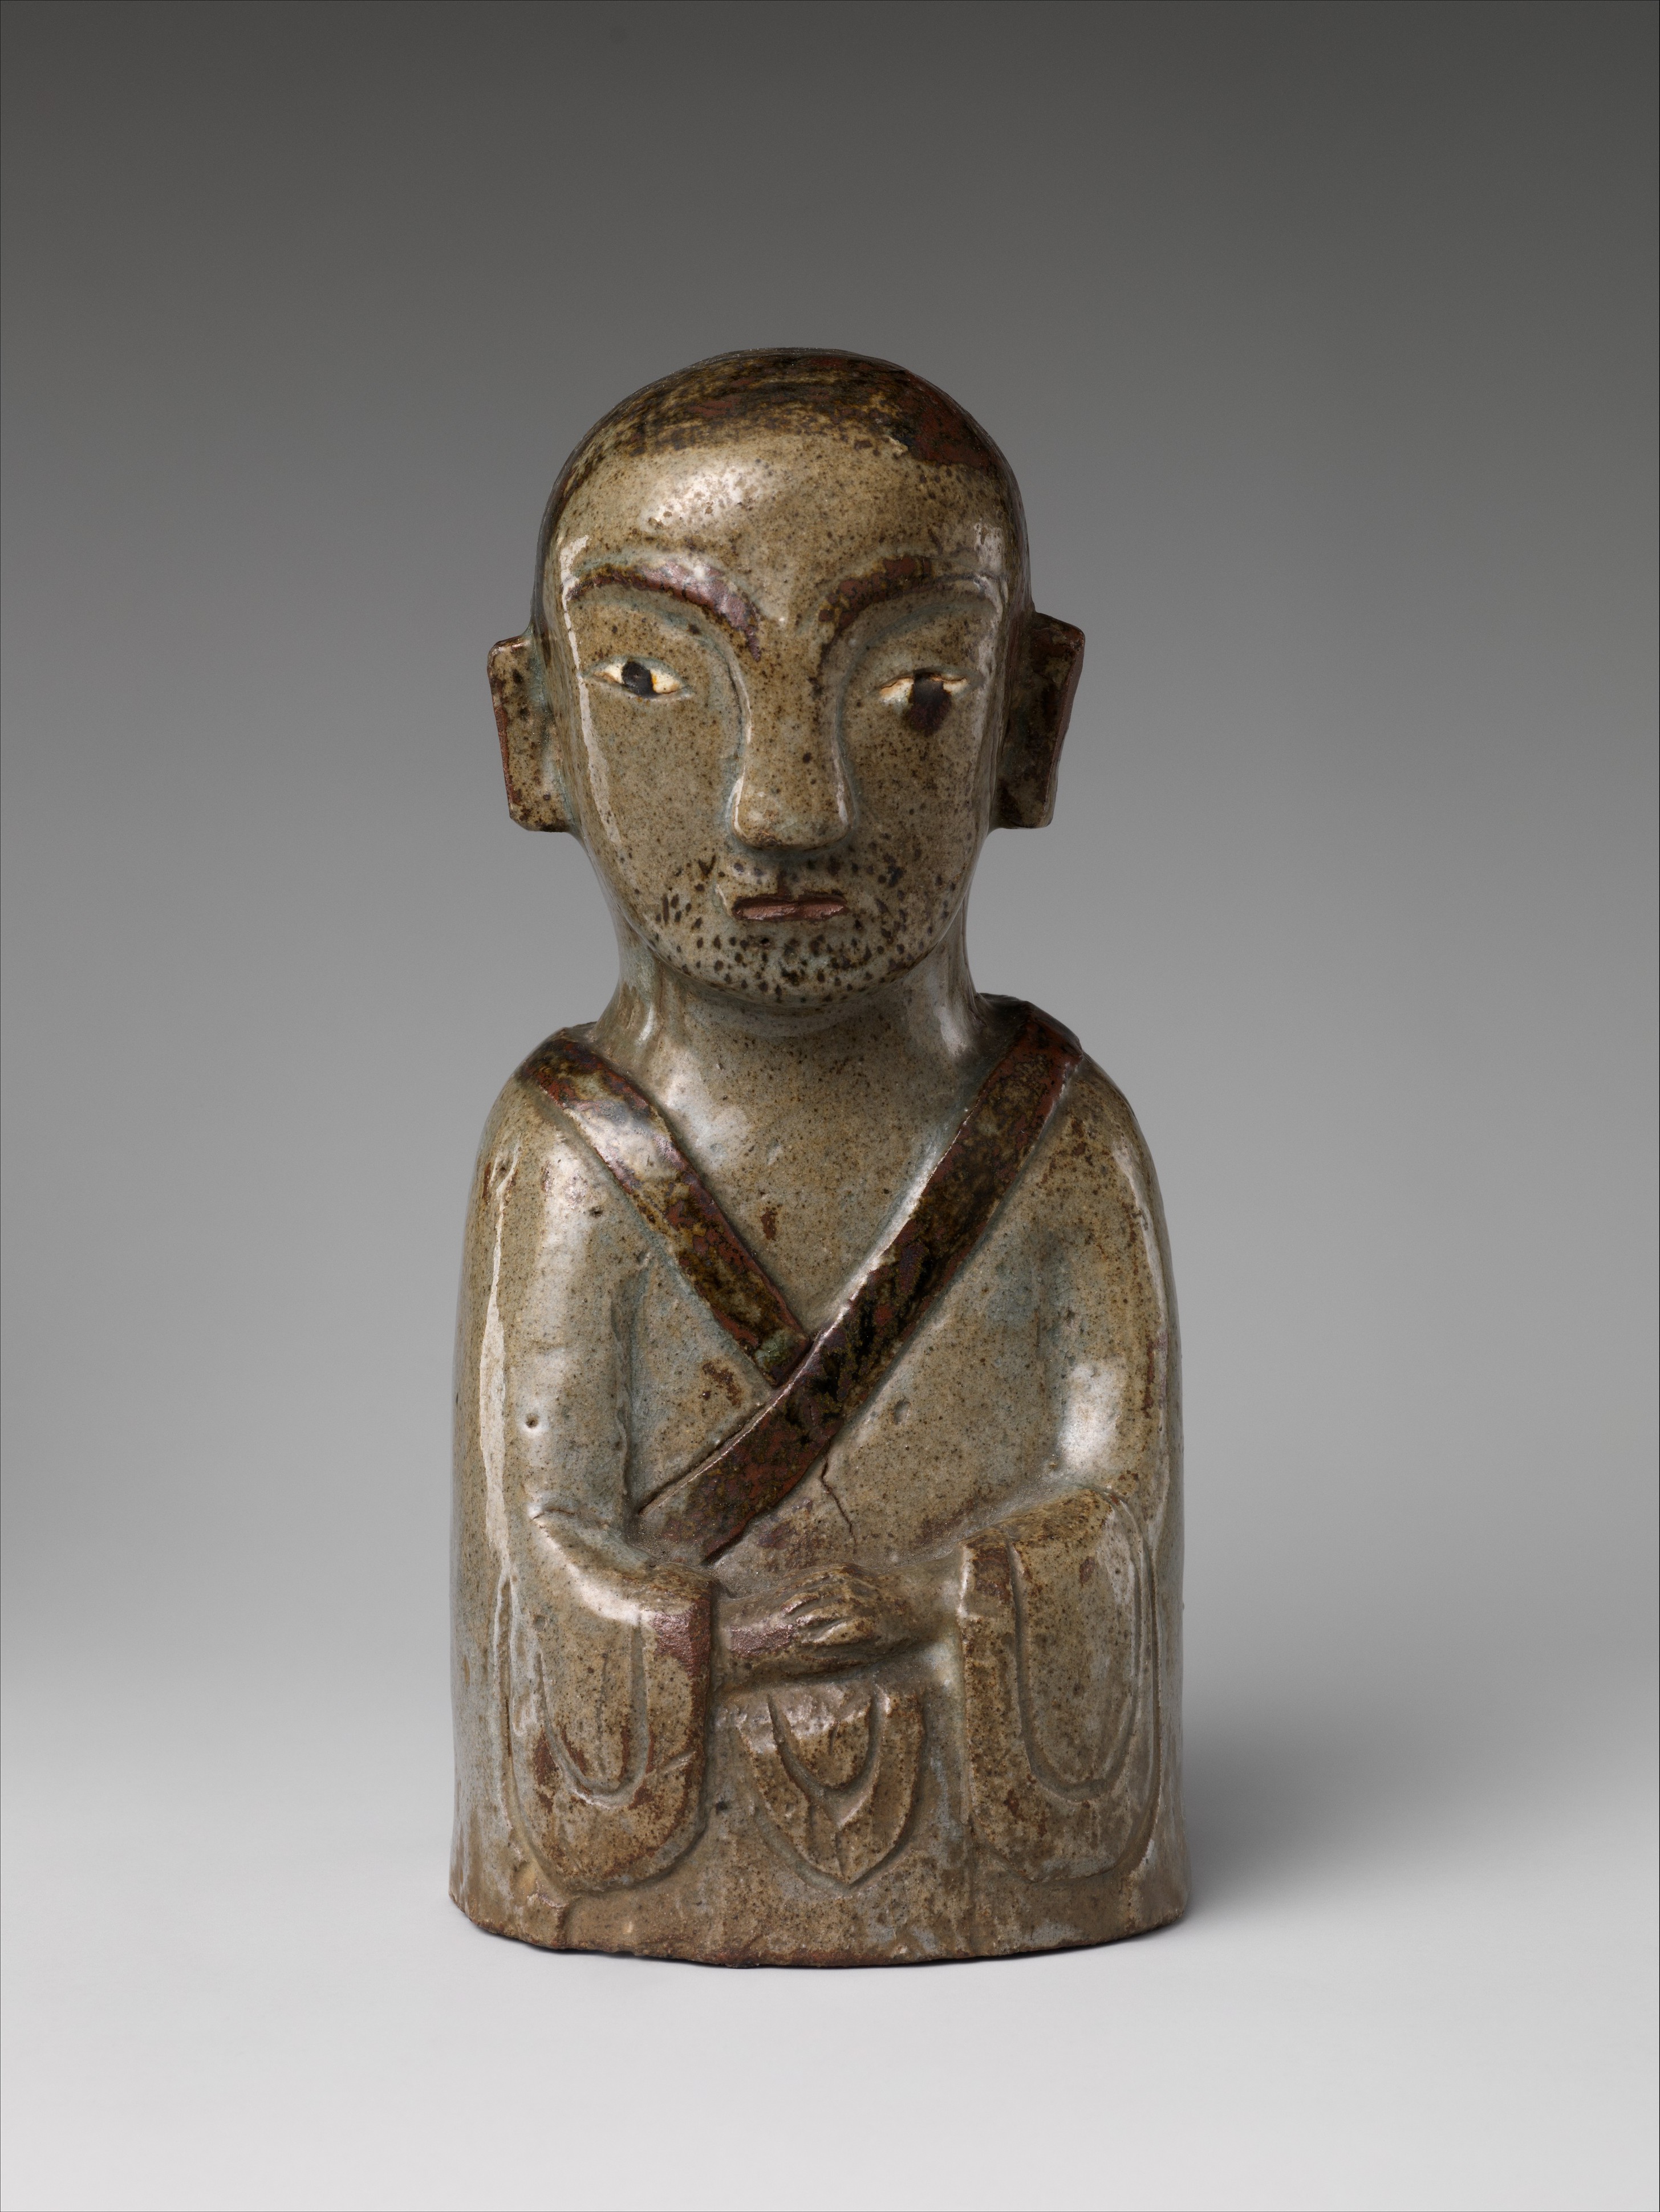 arhat-korea-goryeo-dynasty-918-1392-the-metropolitan-museum-of-art